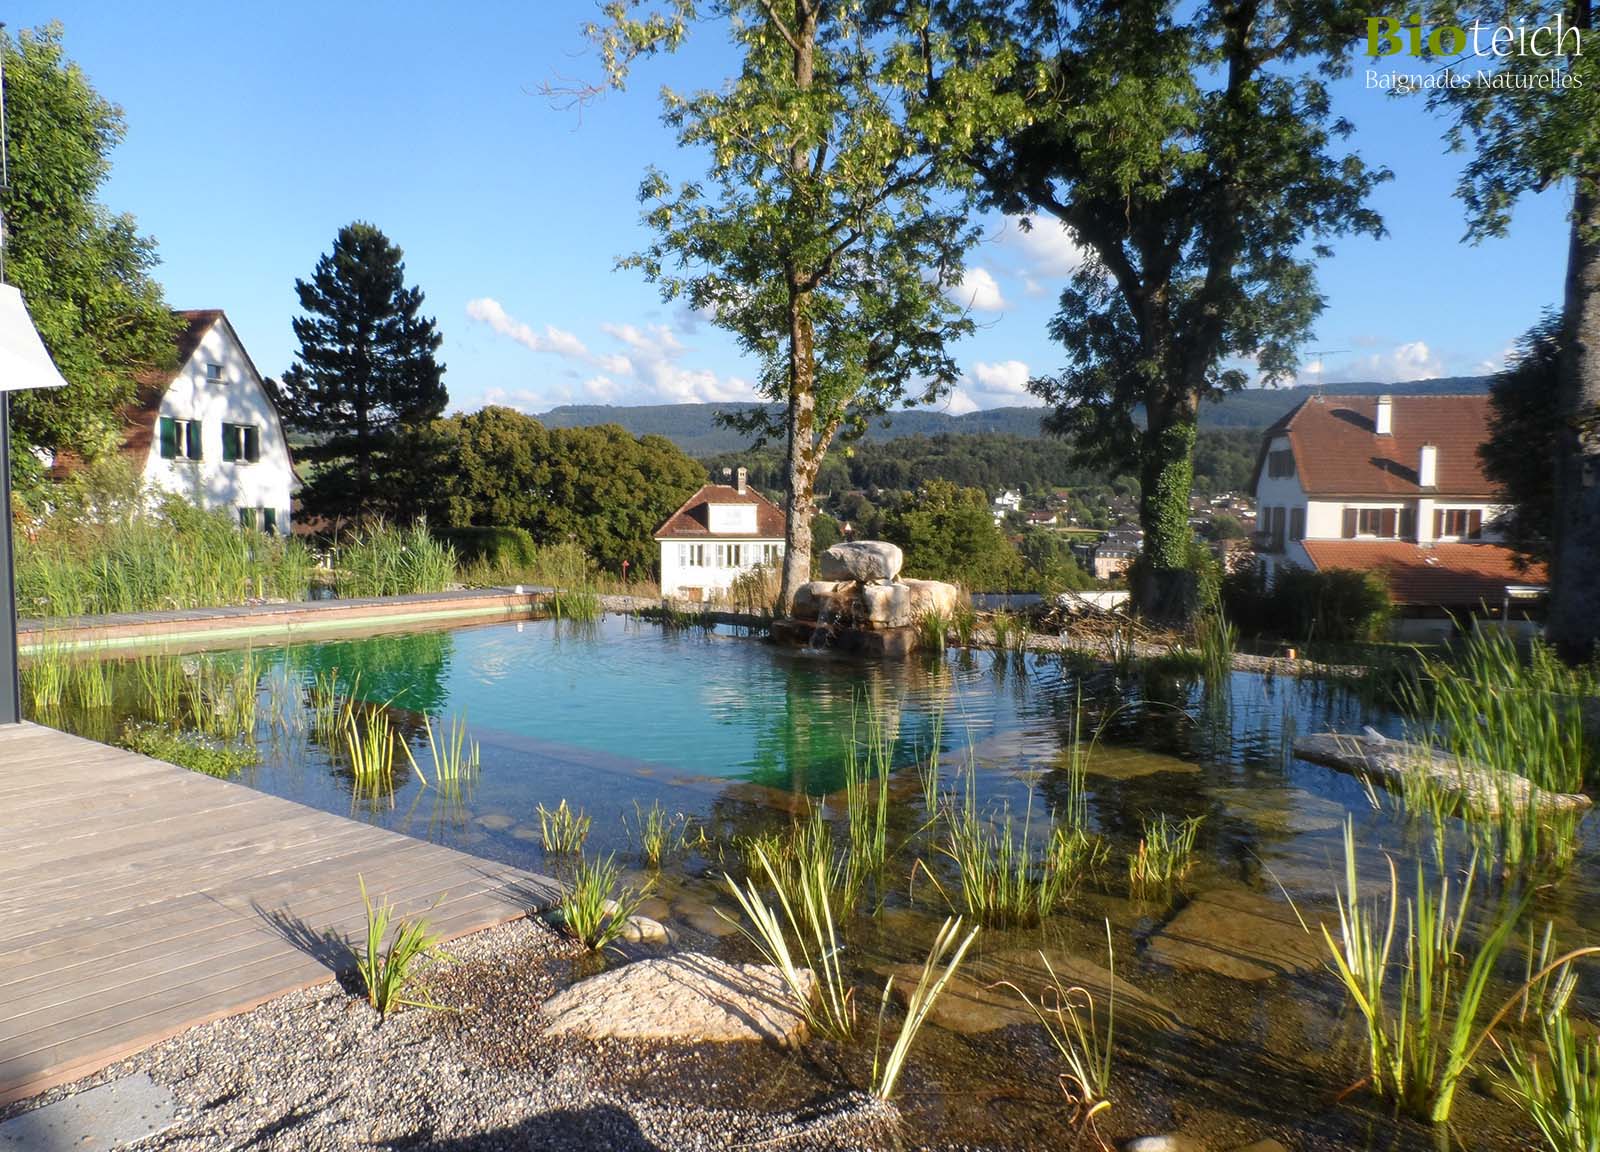 bassins piscine baignade naturelle etang ecologique